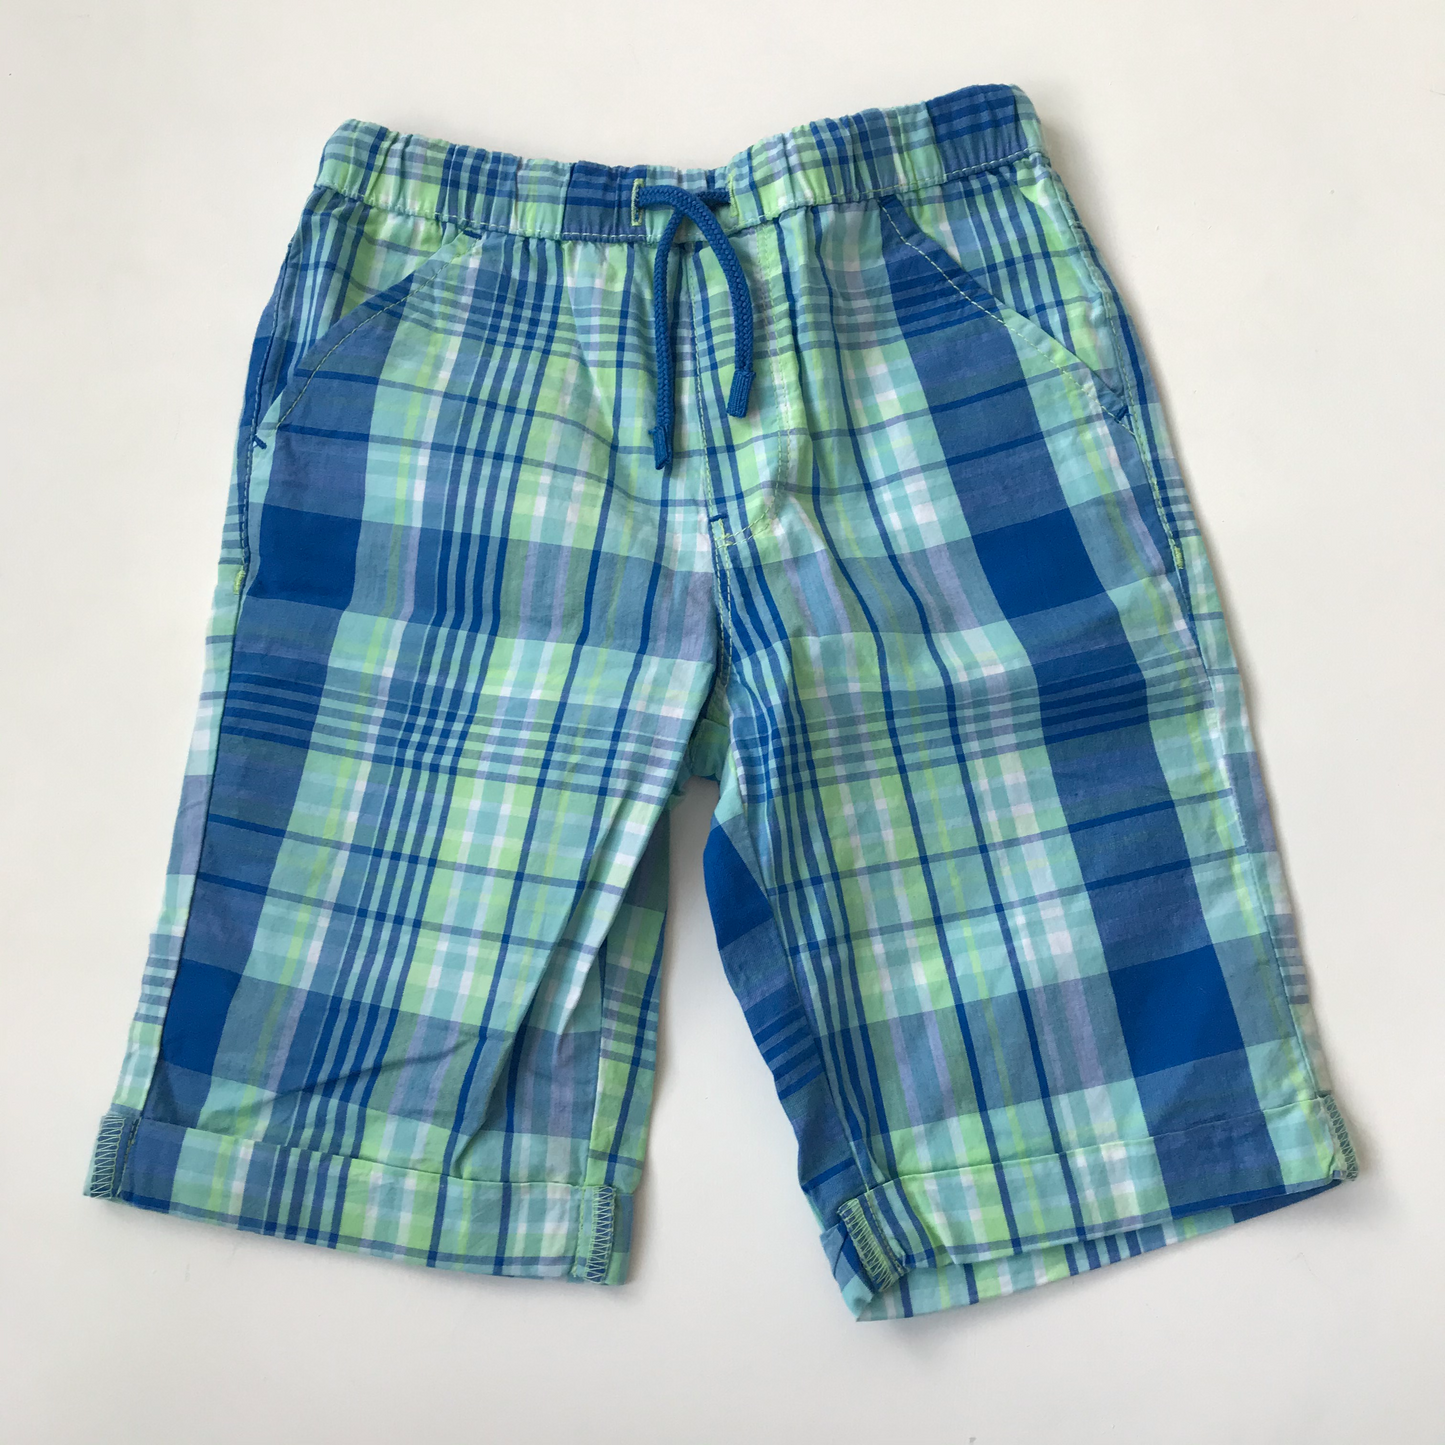 Shorts - Blue & Green Check - Age 5